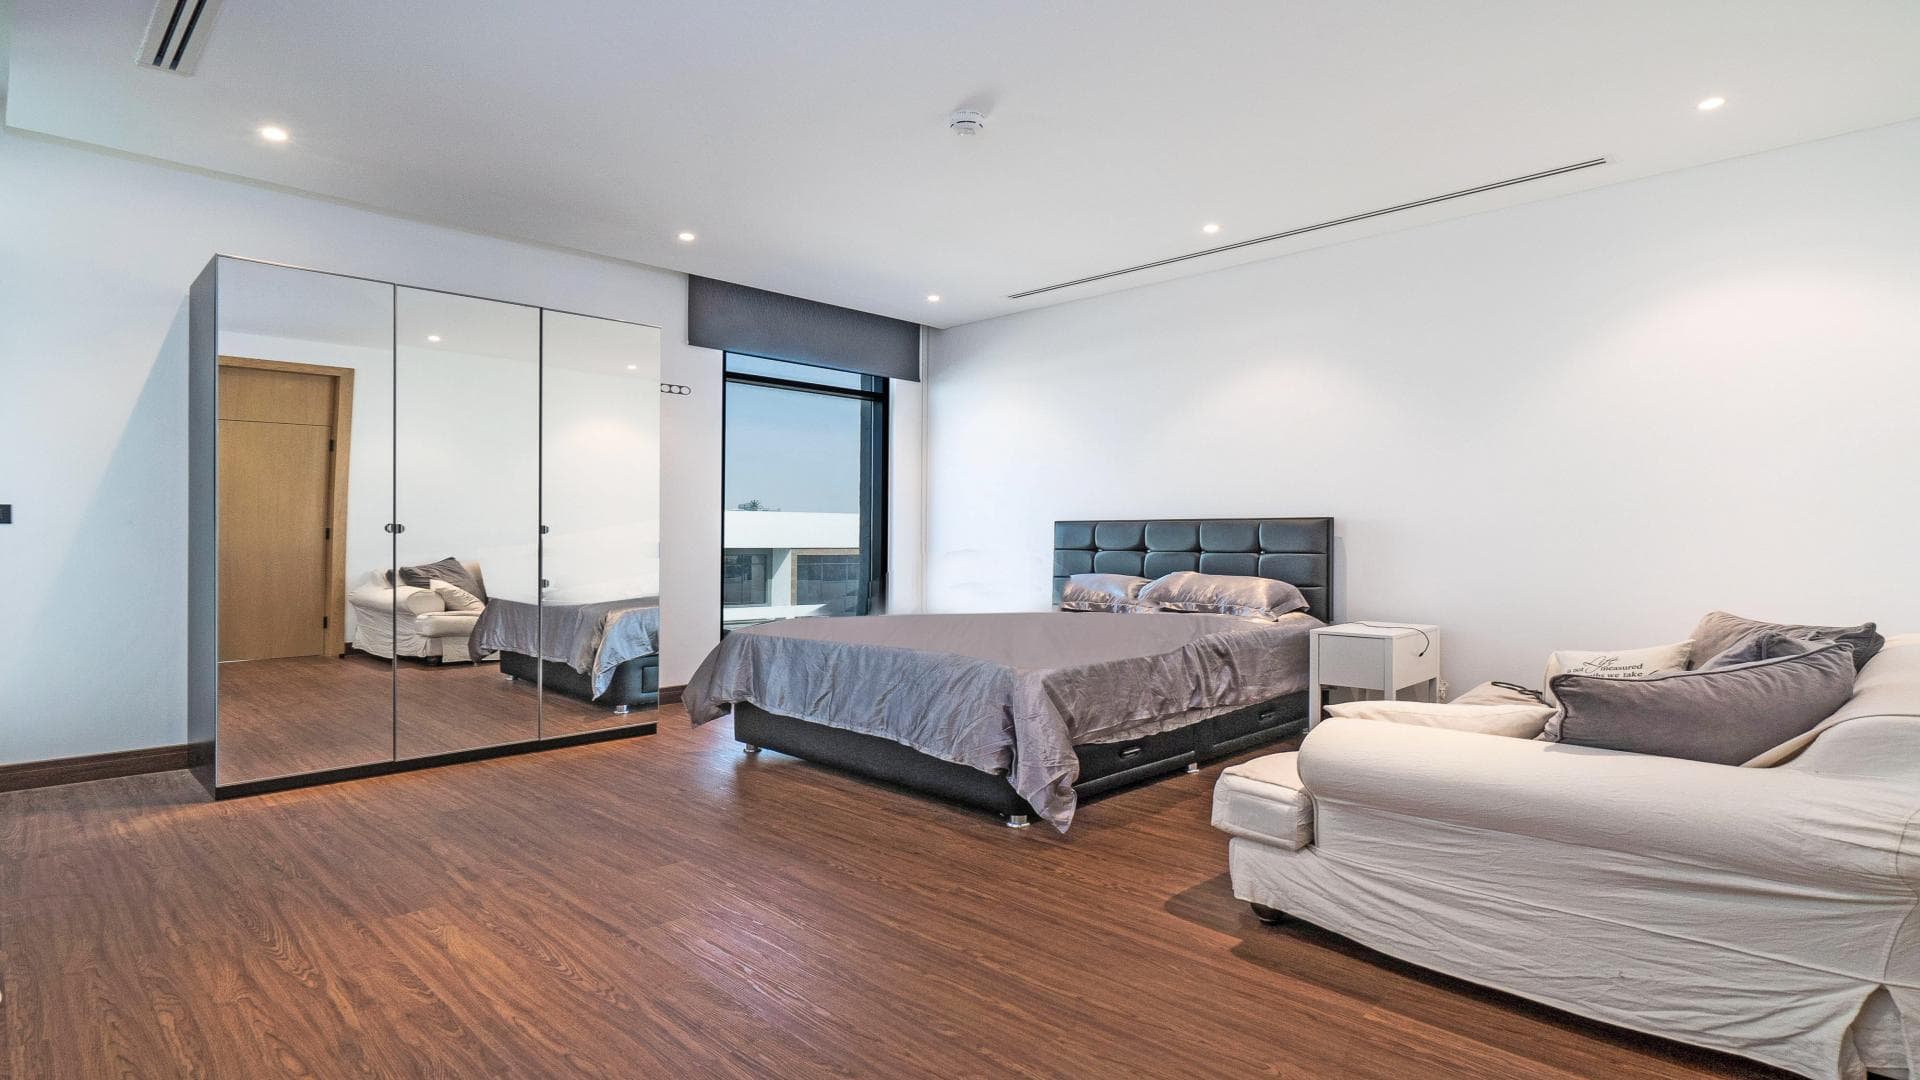 3 Bedroom Townhouse For Rent Jumeirah Luxury Lp17503 2cf2edaf2131c800.jpg